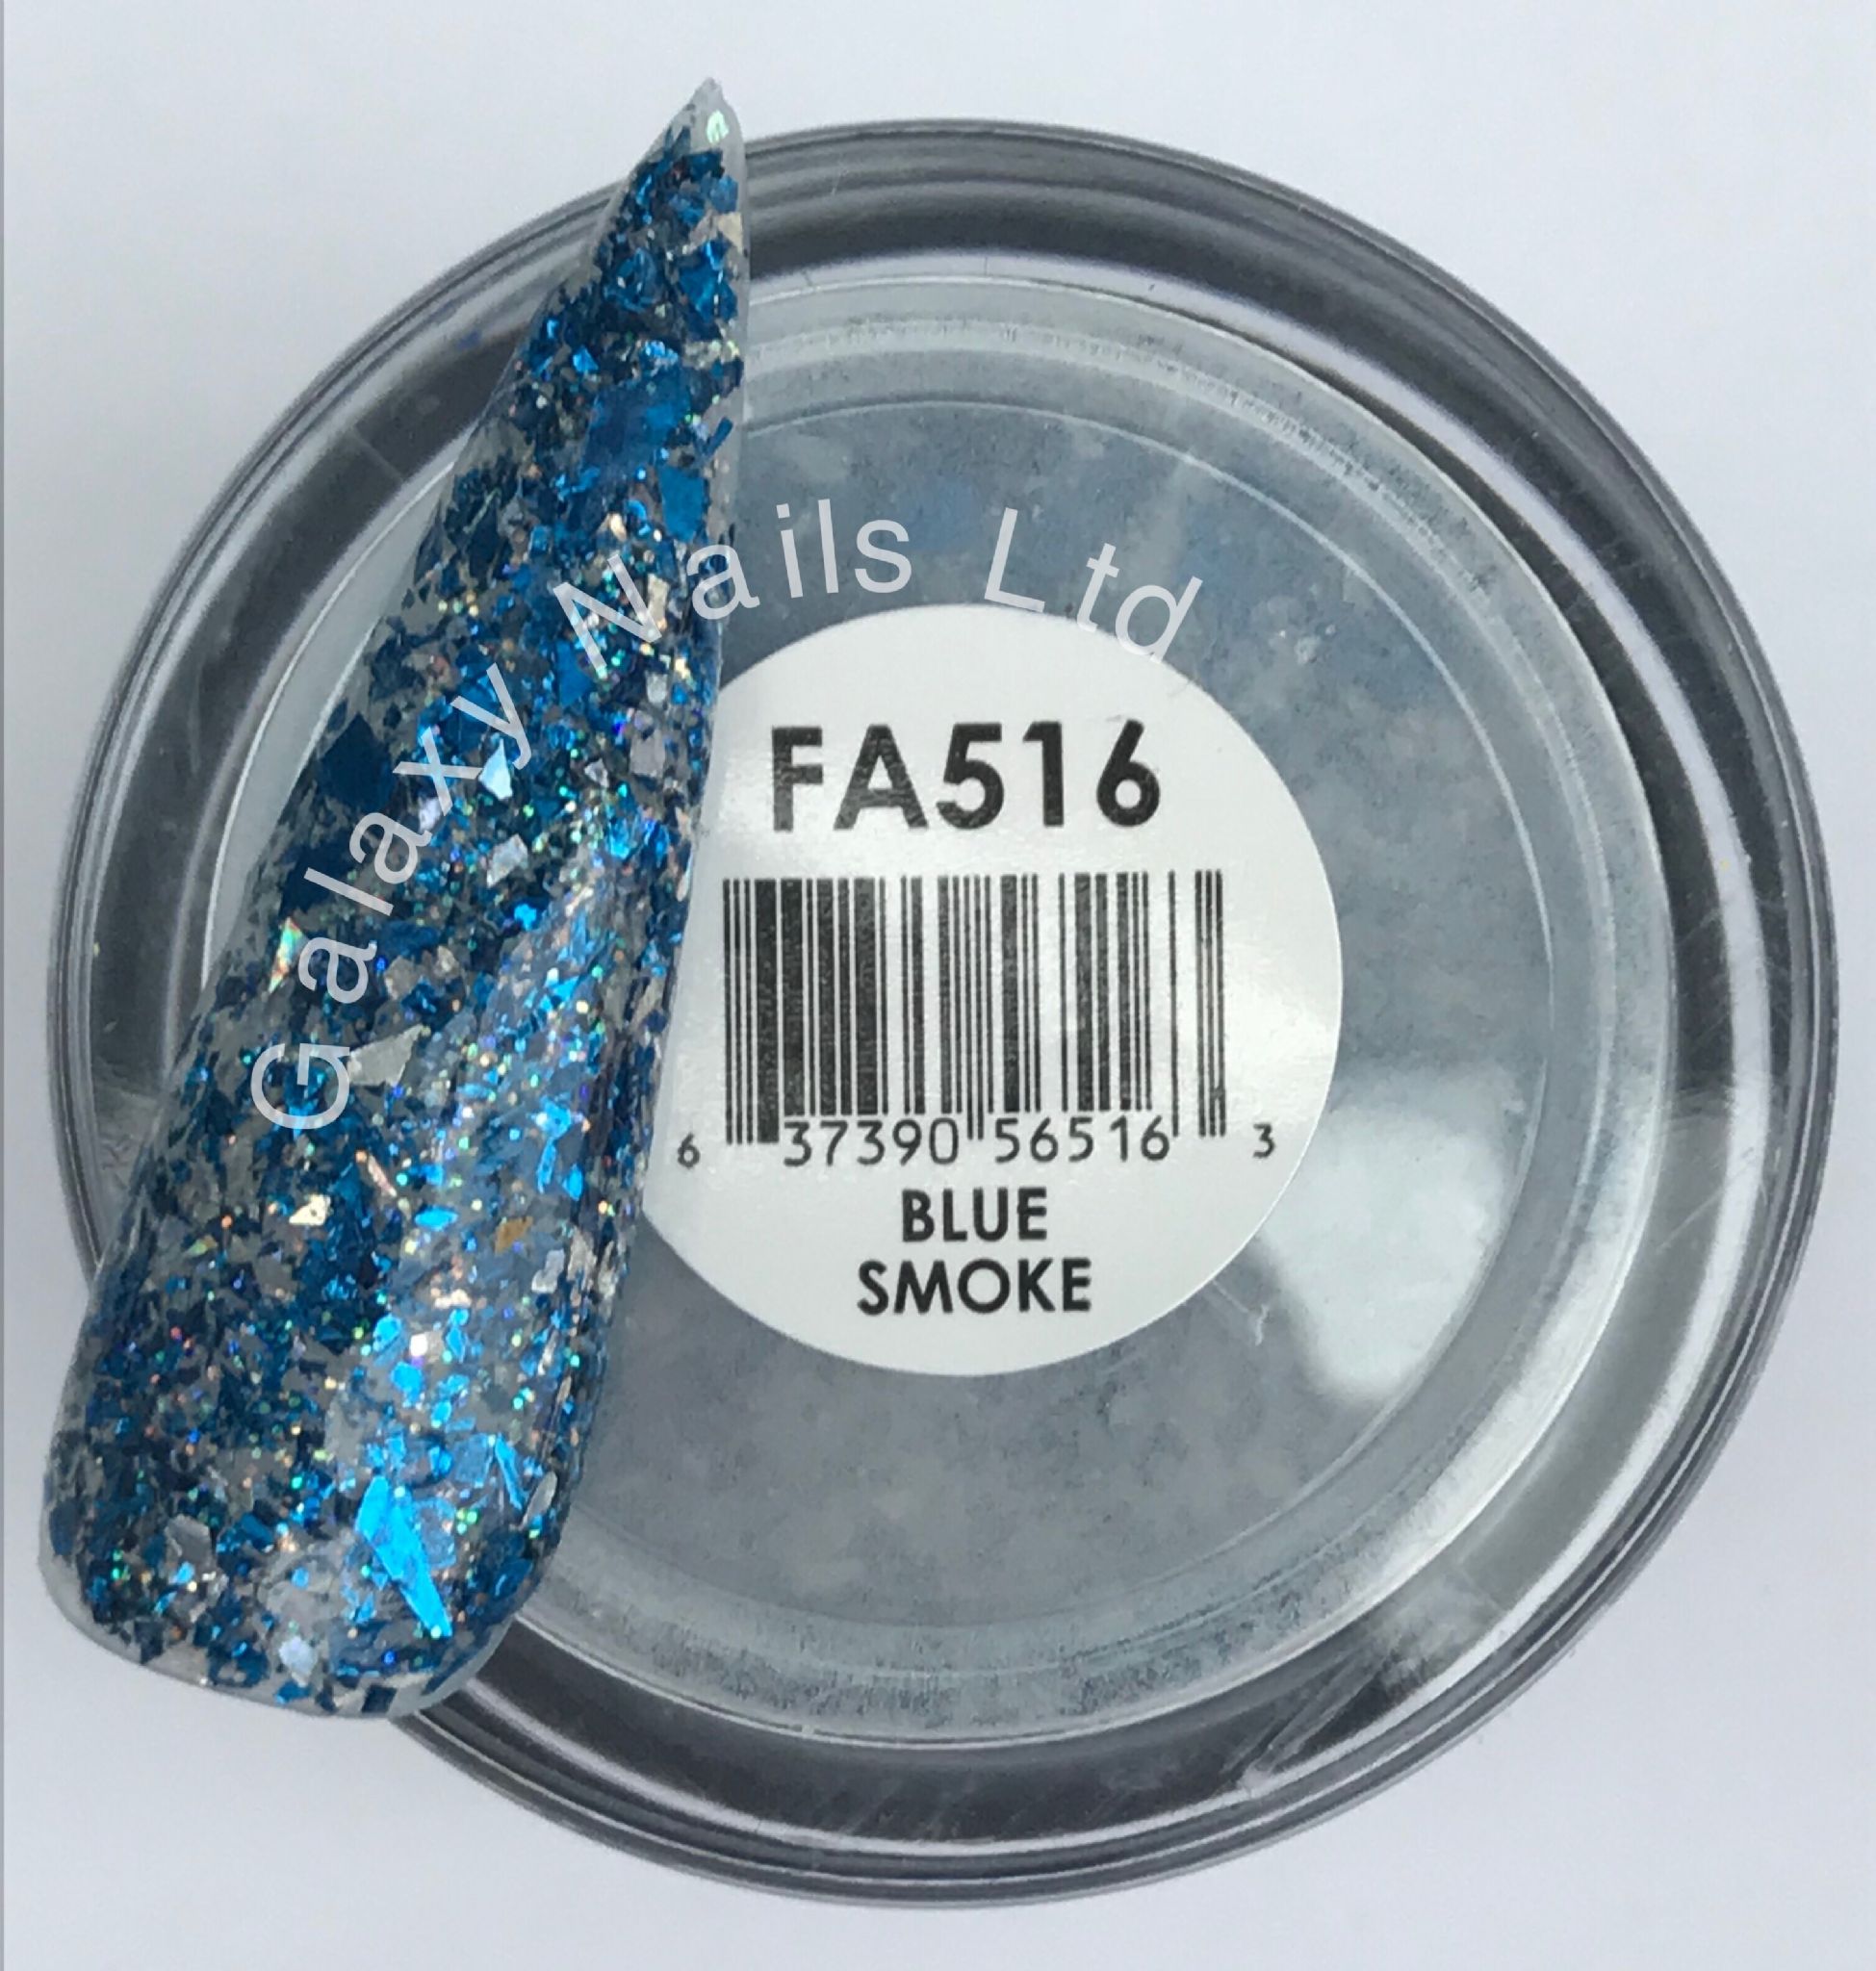 Glam & Glits - Blue Smoke FAC516